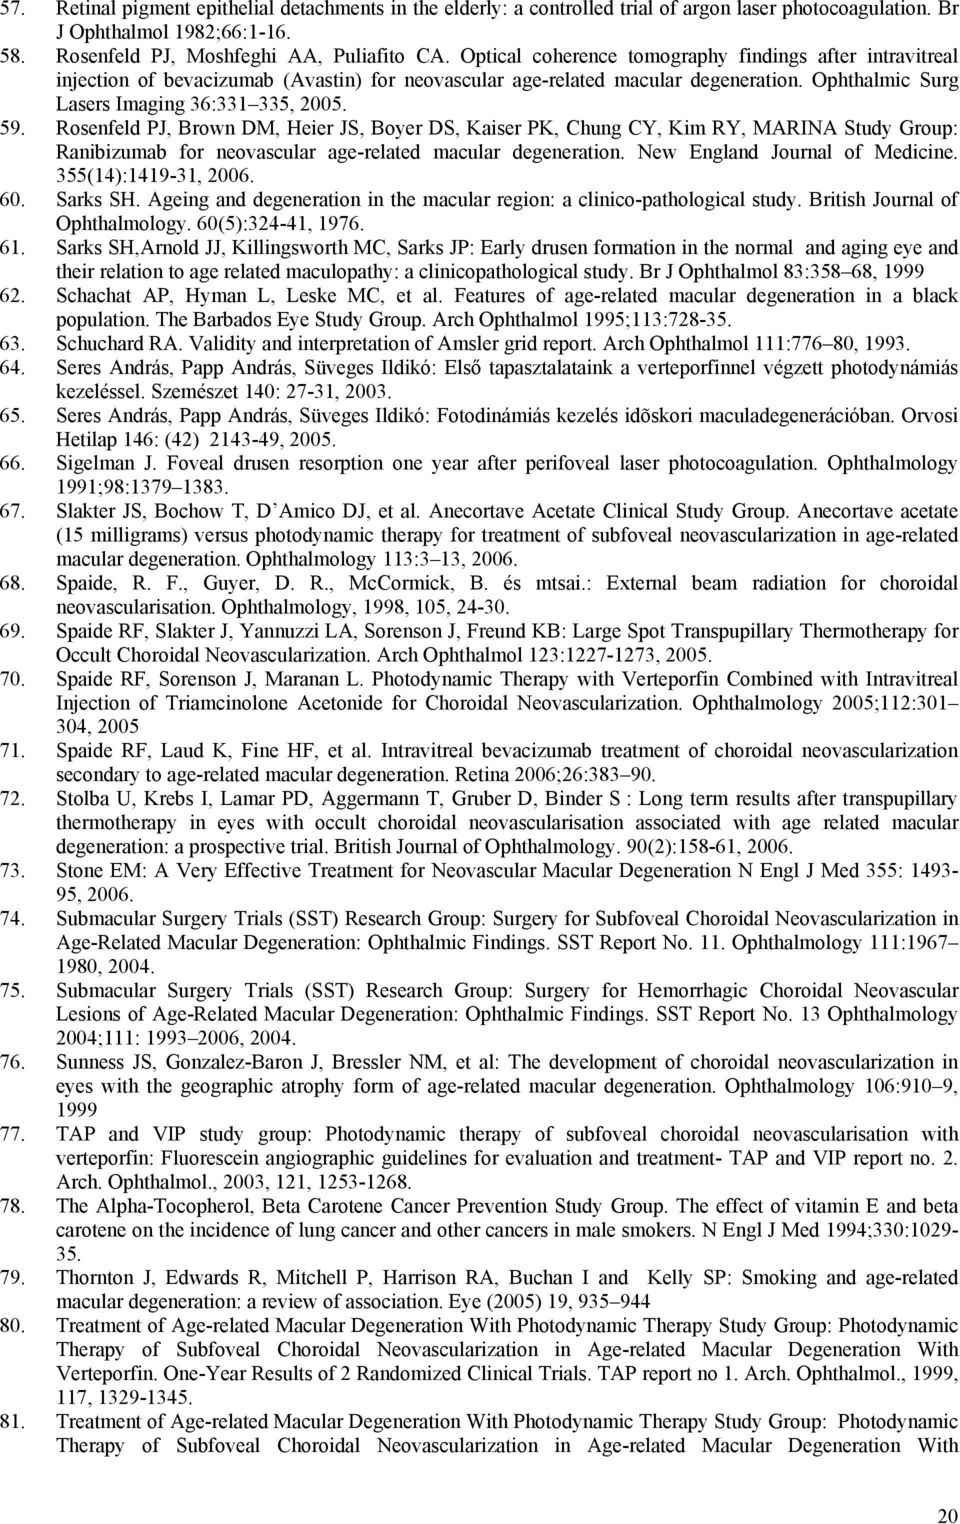 Rosenfeld PJ, Brown DM, Heier JS, Boyer DS, Kaiser PK, Chung CY, Kim RY, MARINA Study Group: Ranibizumab for neovascular age-related macular degeneration. New England Journal of Medicine.